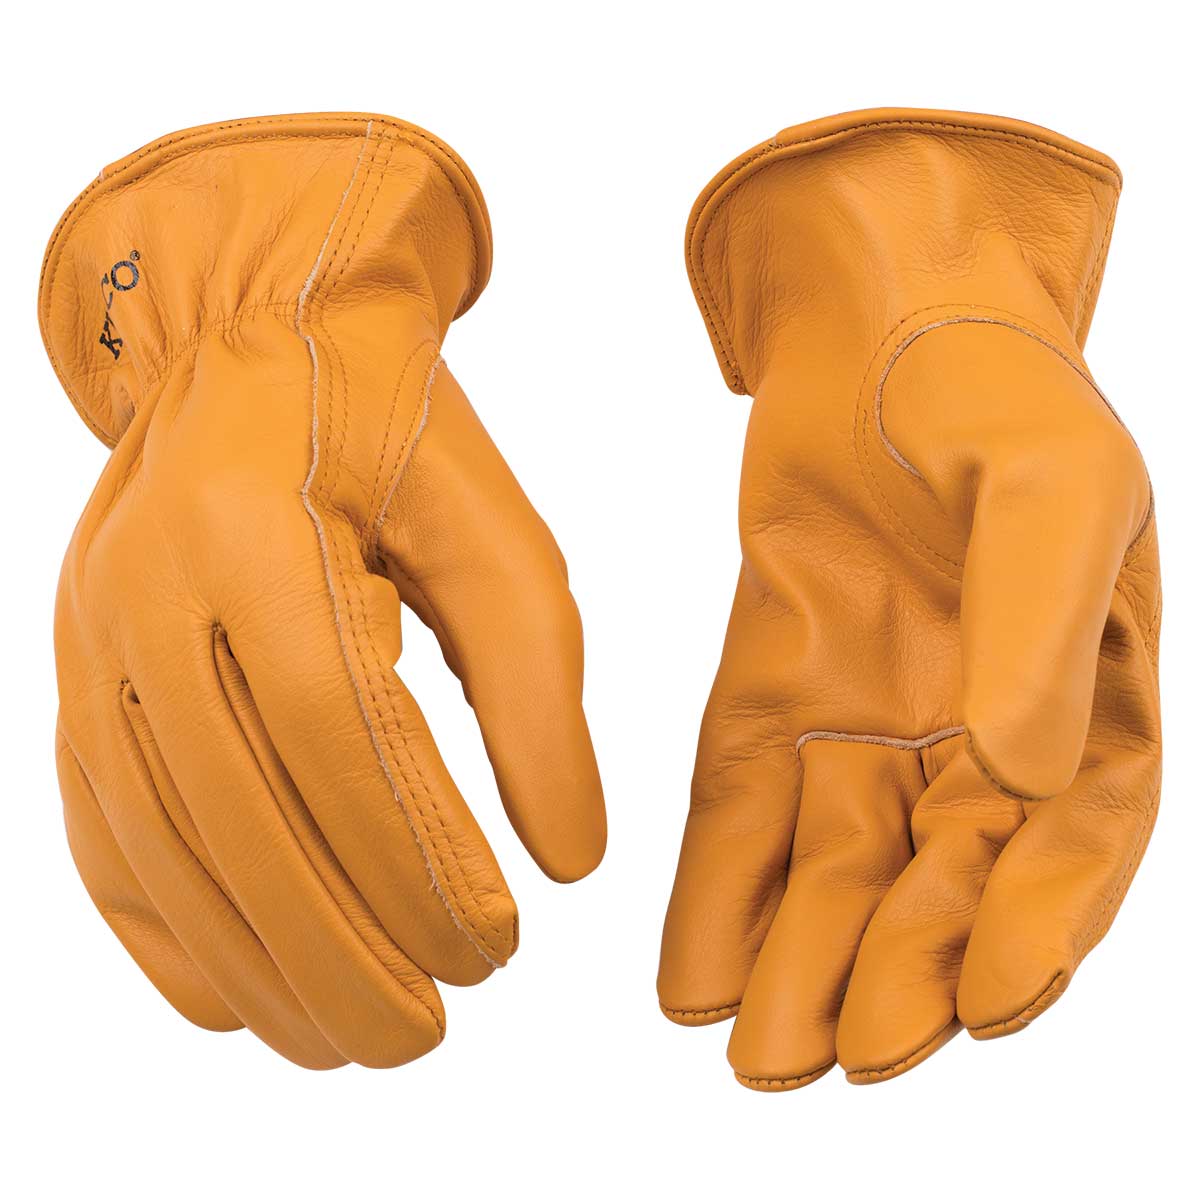 Kinco Full-Grain Buffalo Leather Gloves